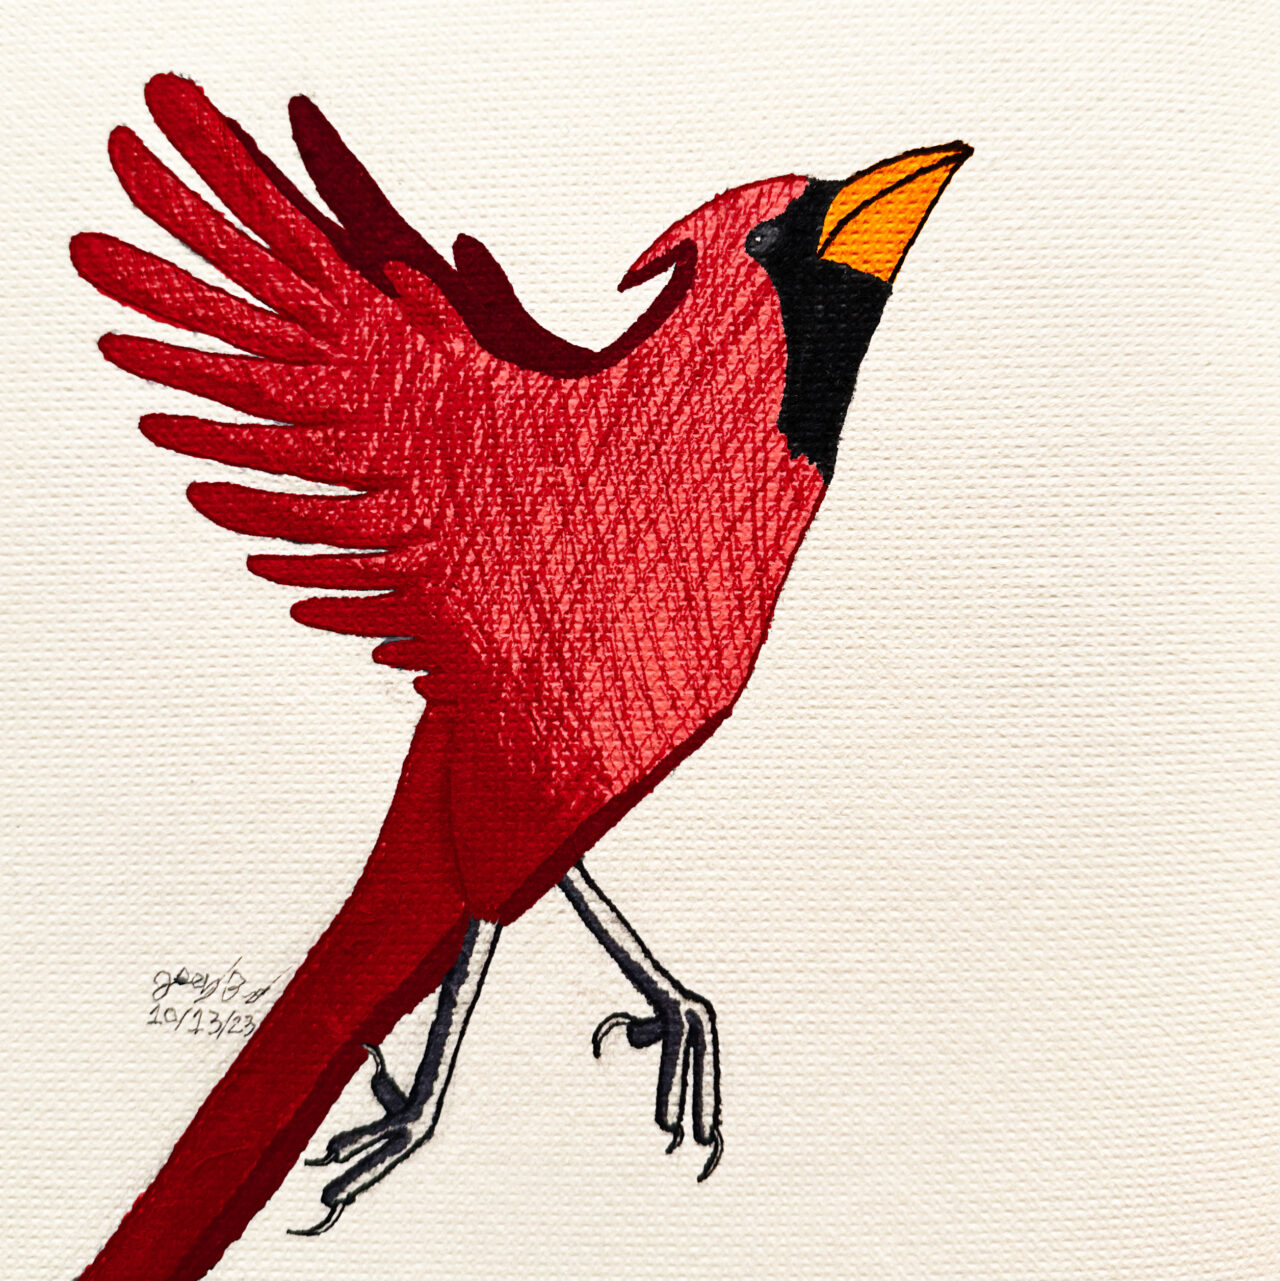 Northern Cardinal by Joseph Bruno